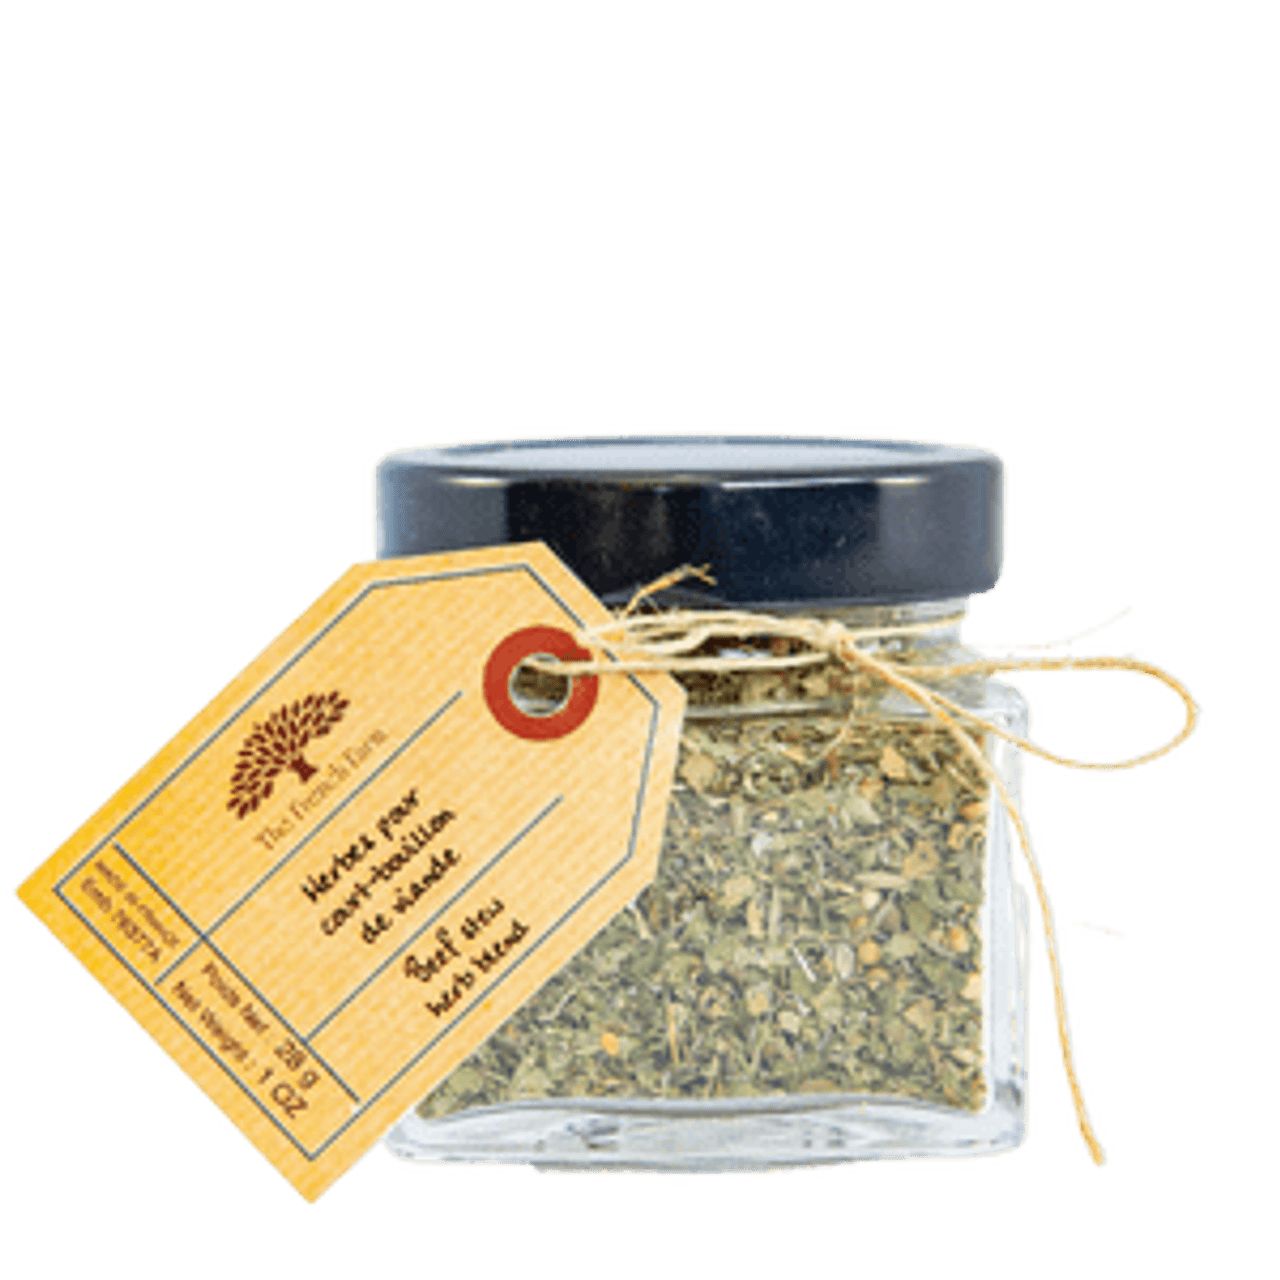  Herb Grinder-Wirsh Electric Spice Grinder with 5.3oz